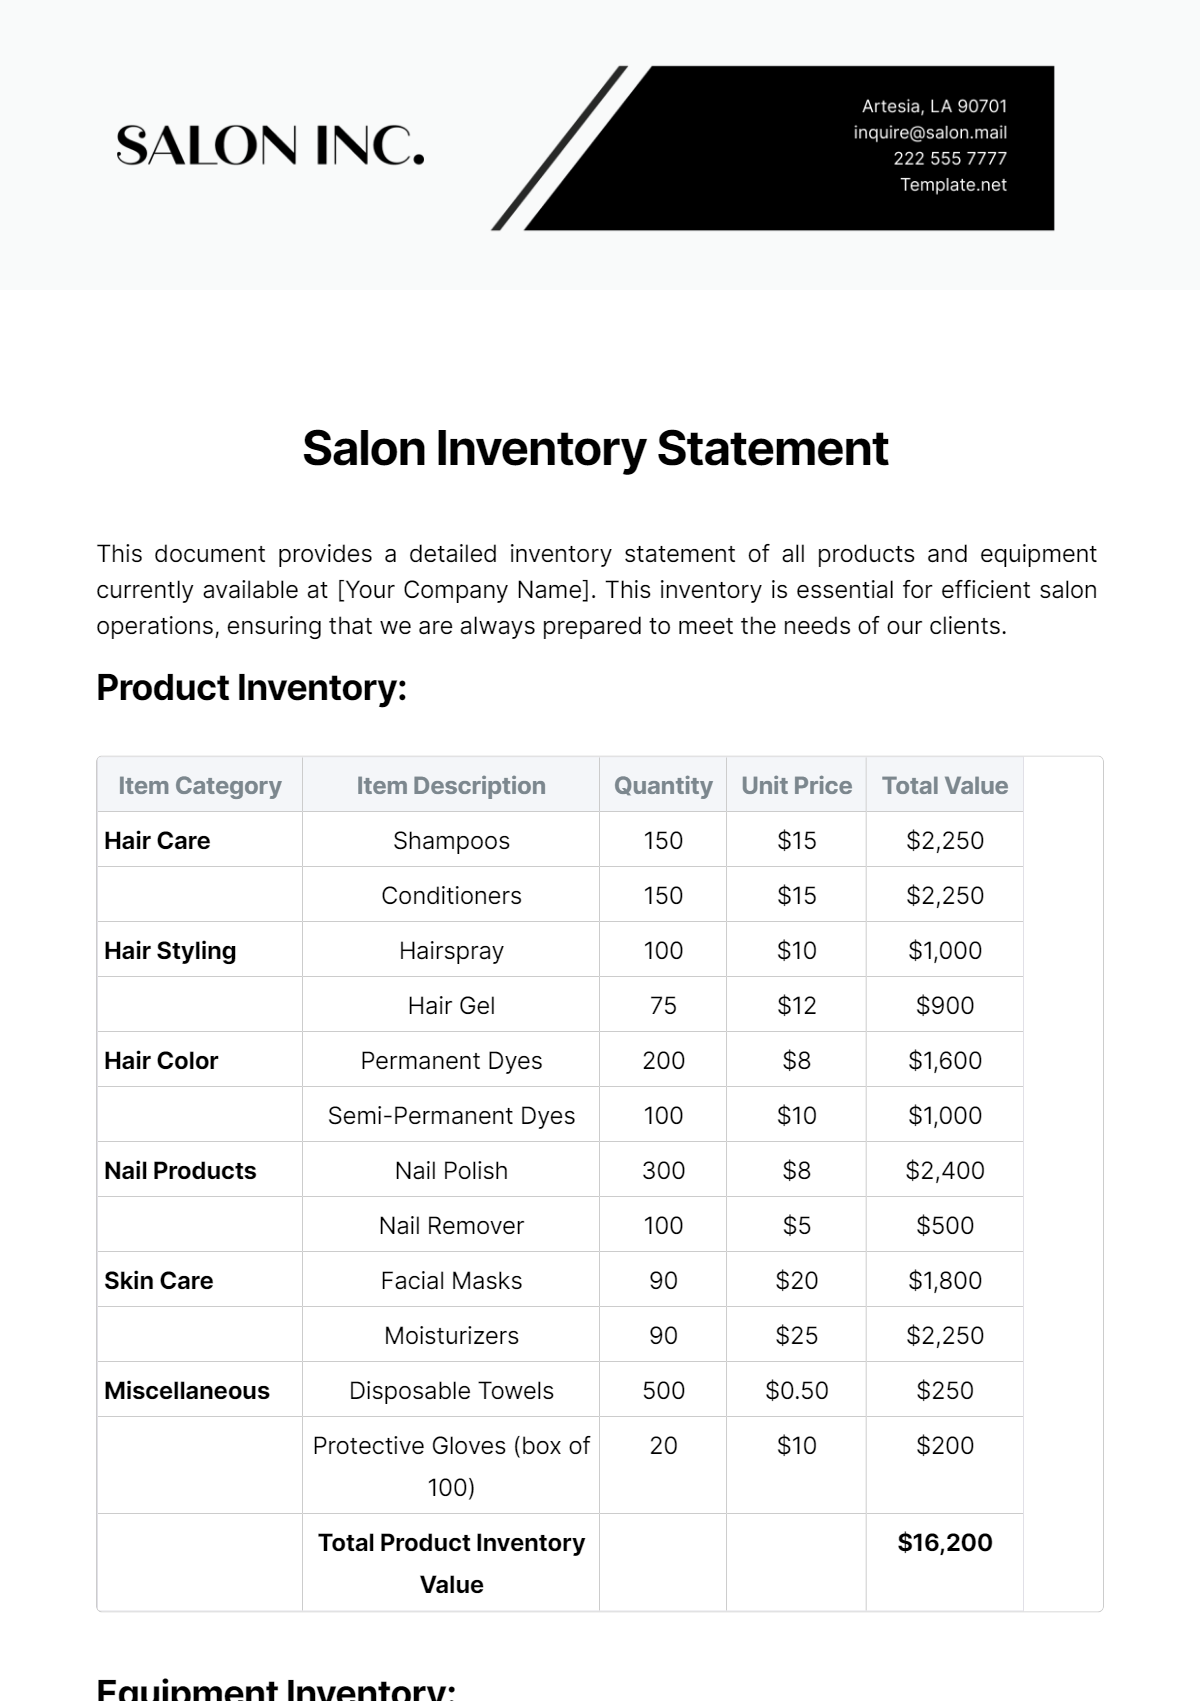 Salon Inventory Statement Template